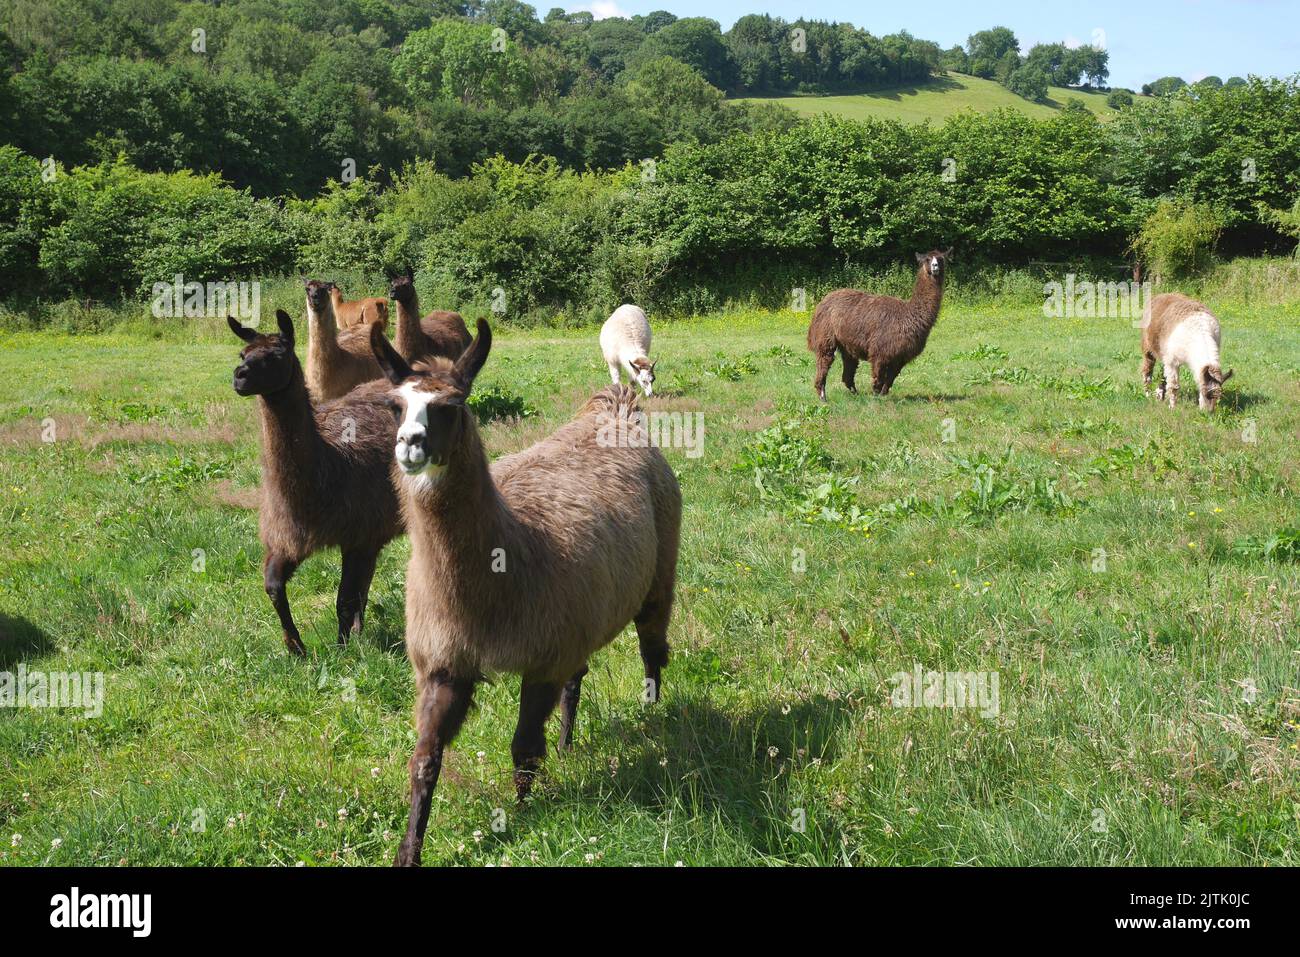 Llamas in a field, on a farm, Ewyas Harold, Herefordshire, England Stock Photo